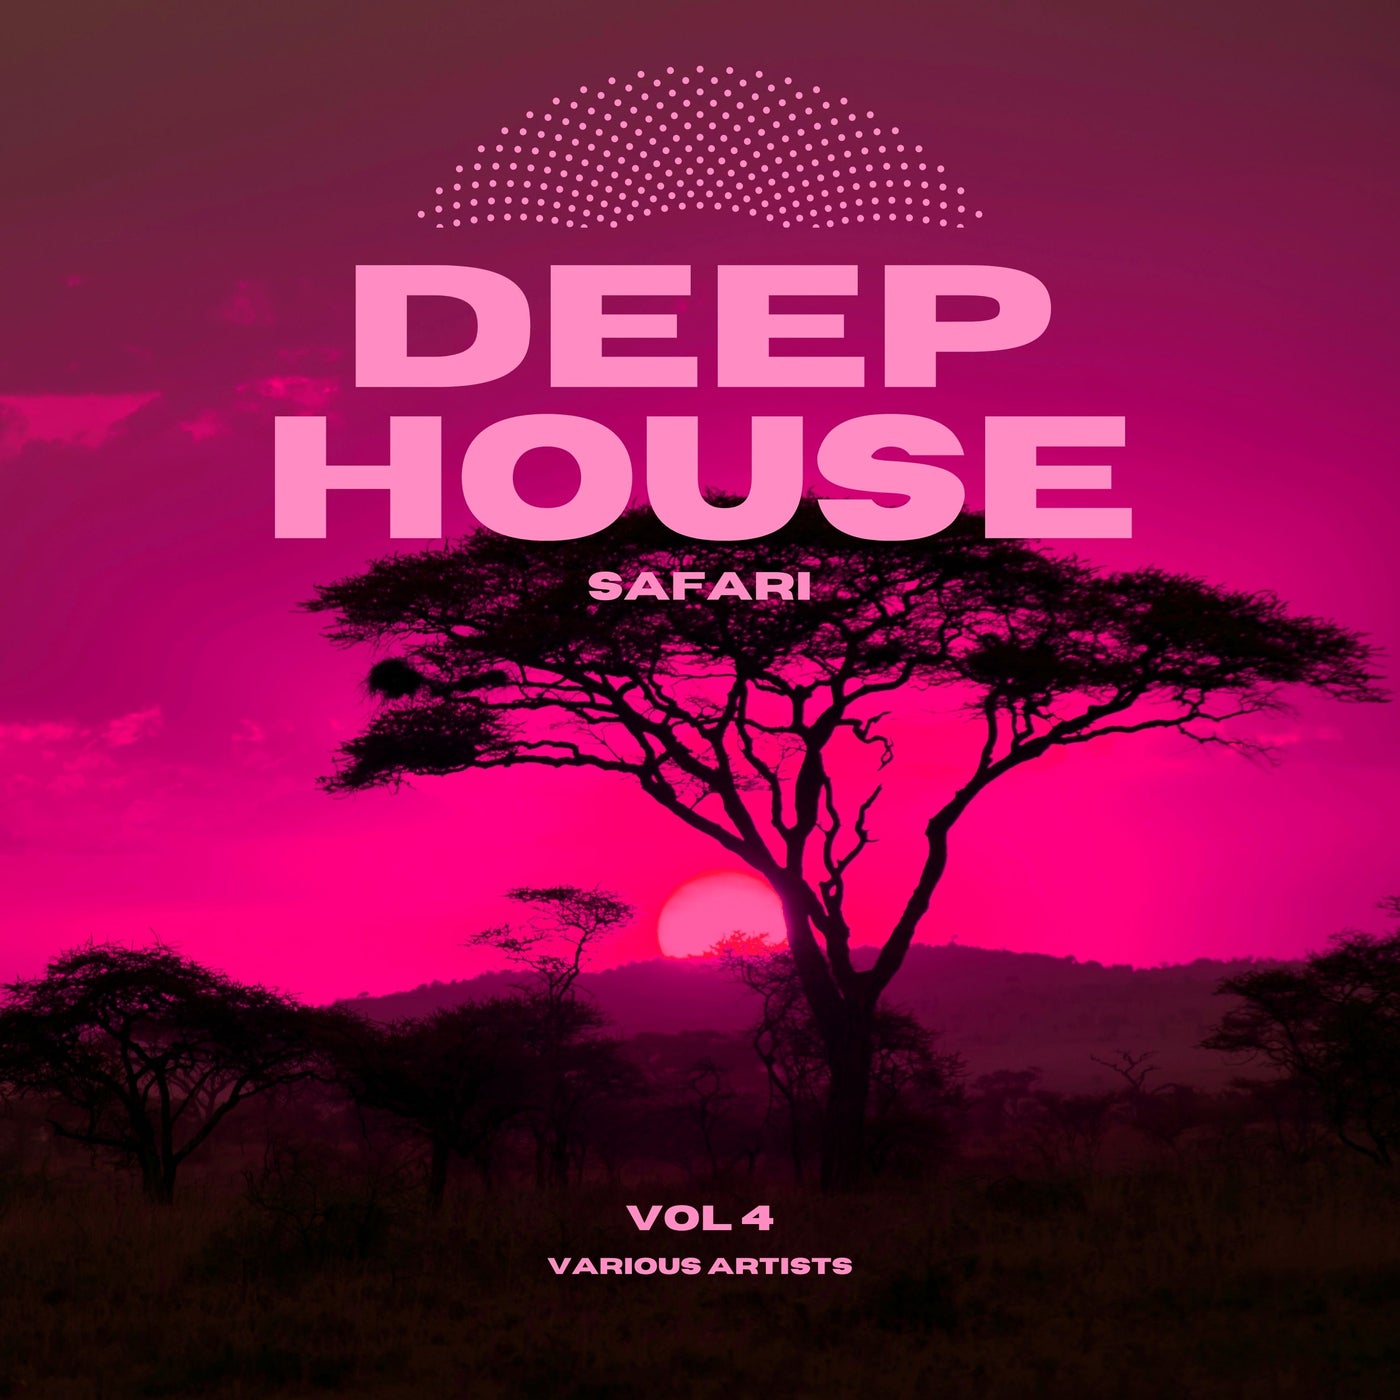 Deep-House Safari, Vol. 4